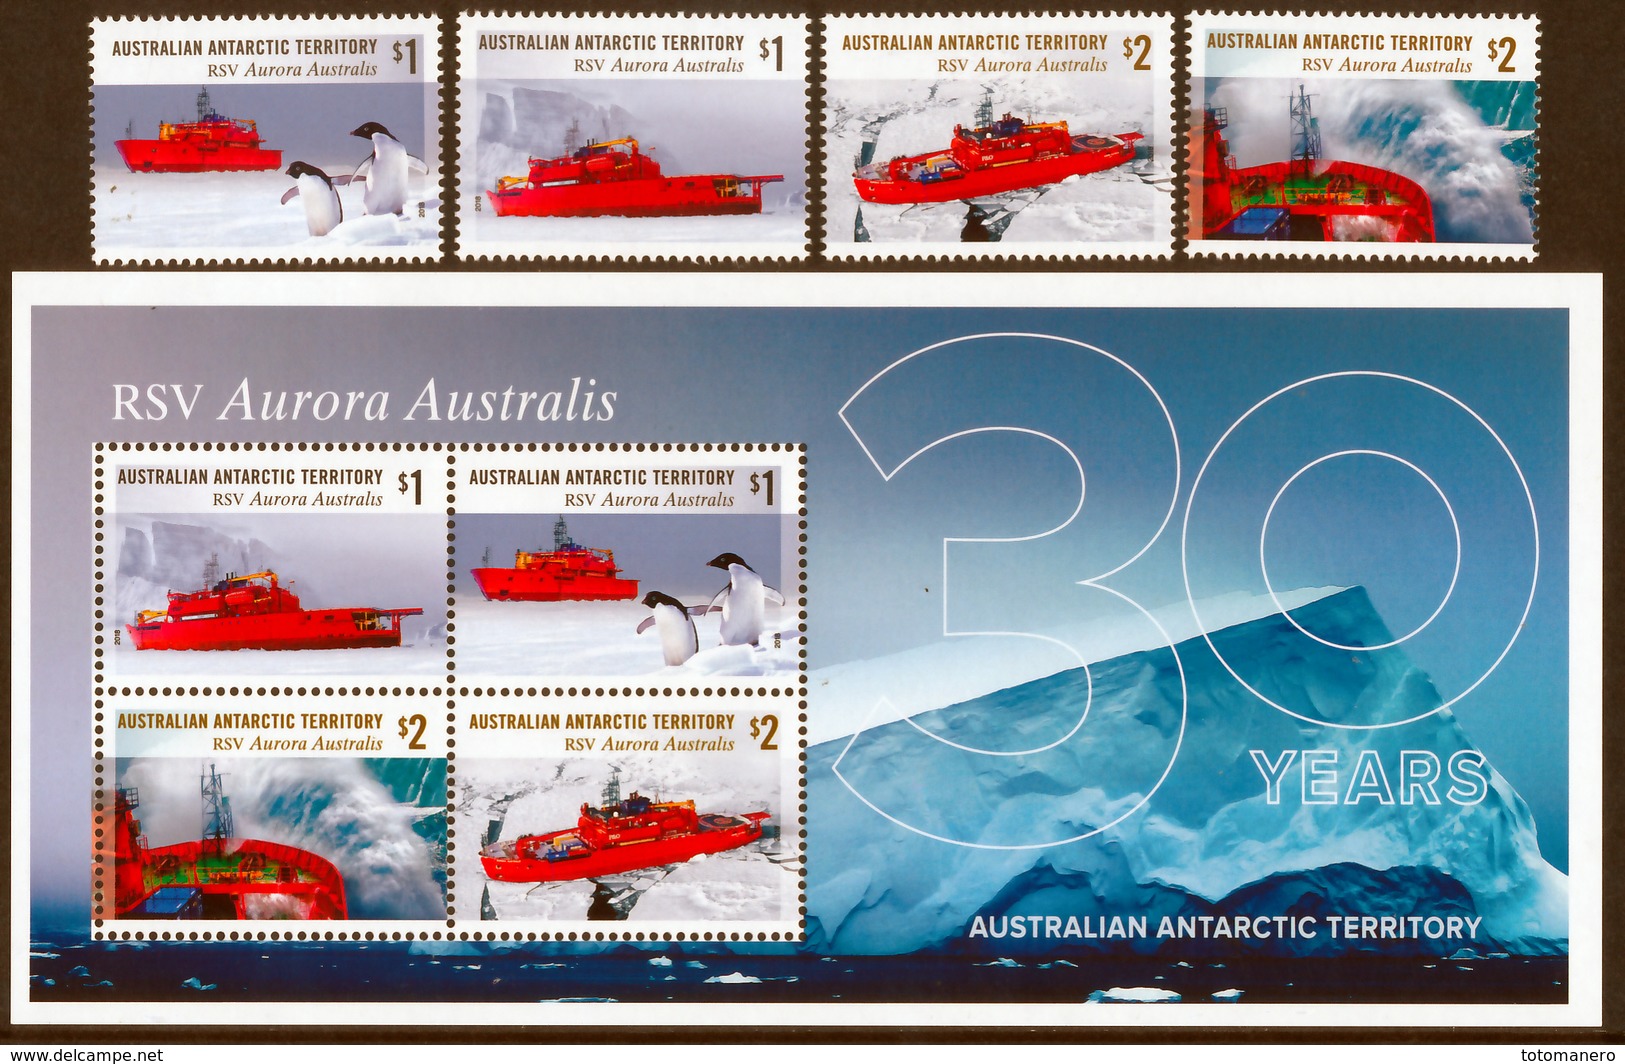 A.A.T. AUSTRALIAN ANTARCTIC TERRITORY 2018 RSV Aurora Australis Set & Minisheet  [MNH] - Unused Stamps